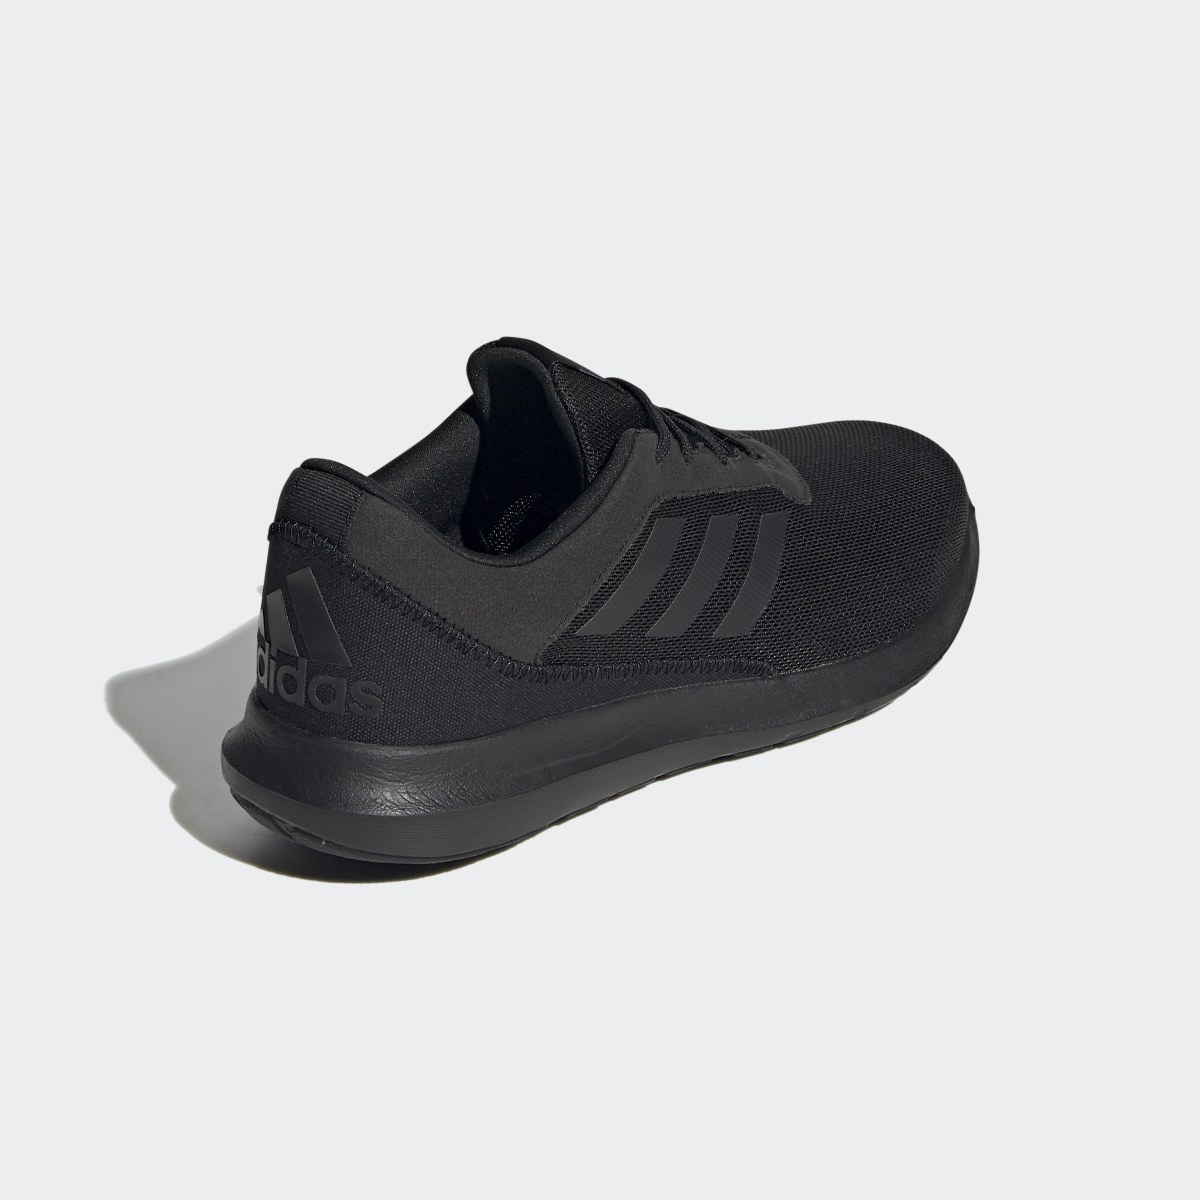 Adidas Coreracer Shoes. 6